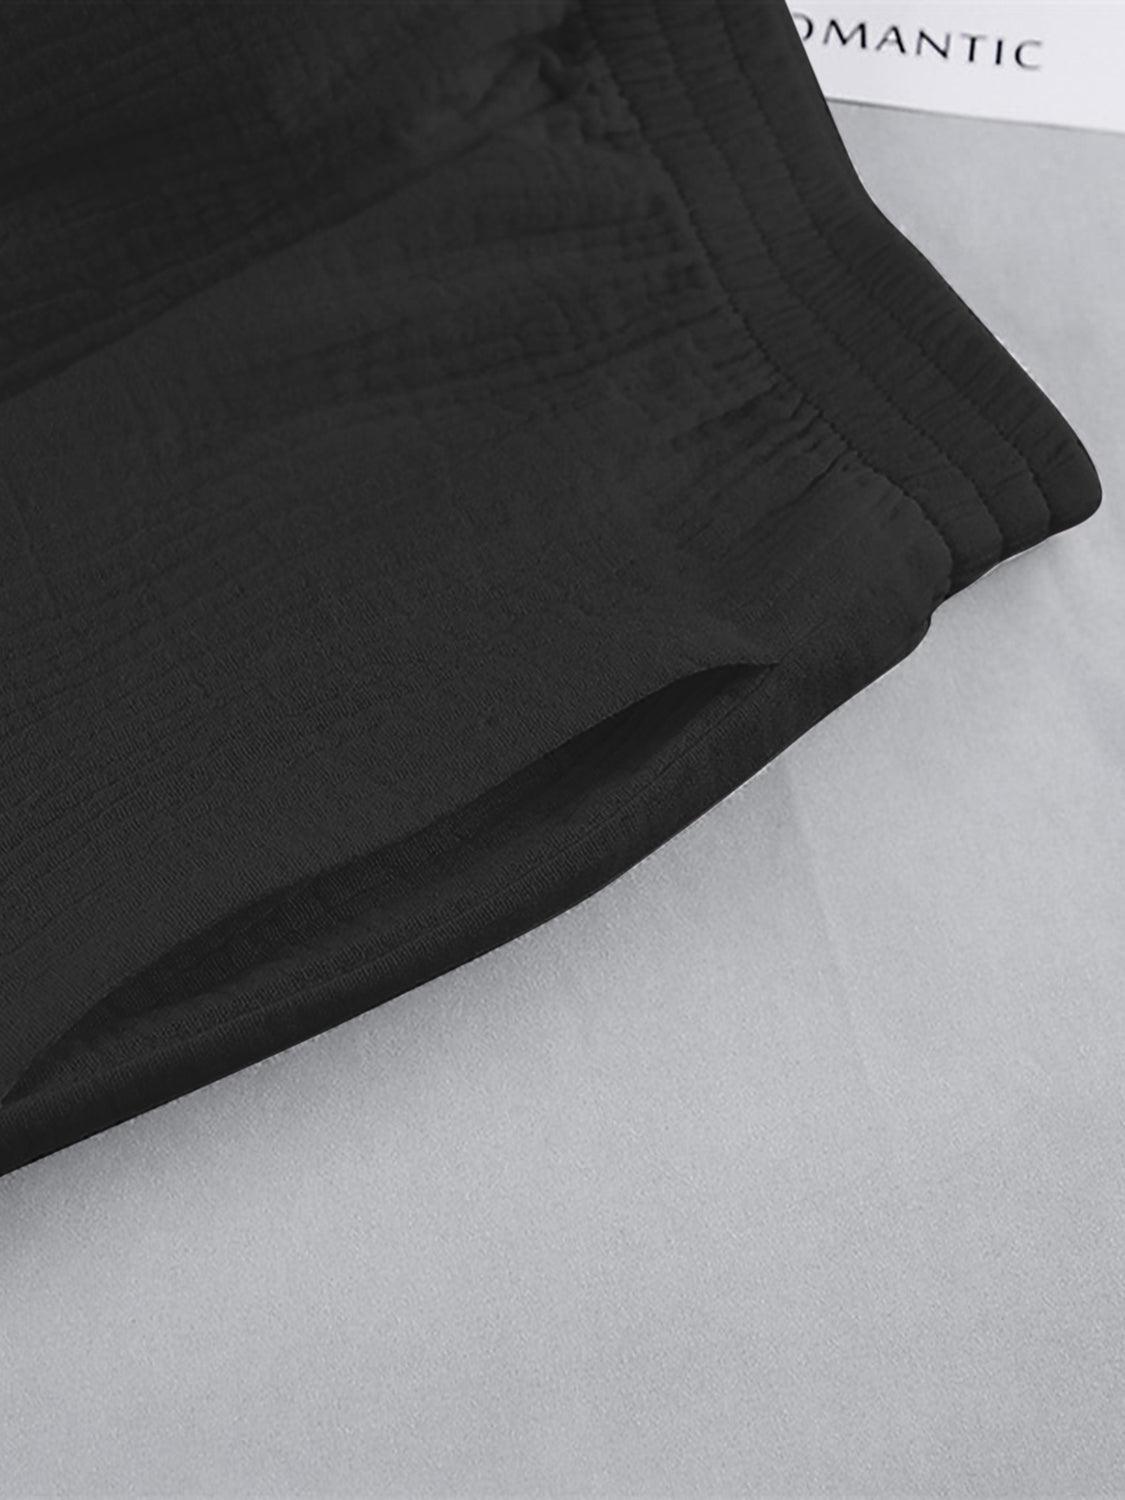 Texture Button Up Long Sleeve Shirt and Pants Set - Bona Fide Fashion